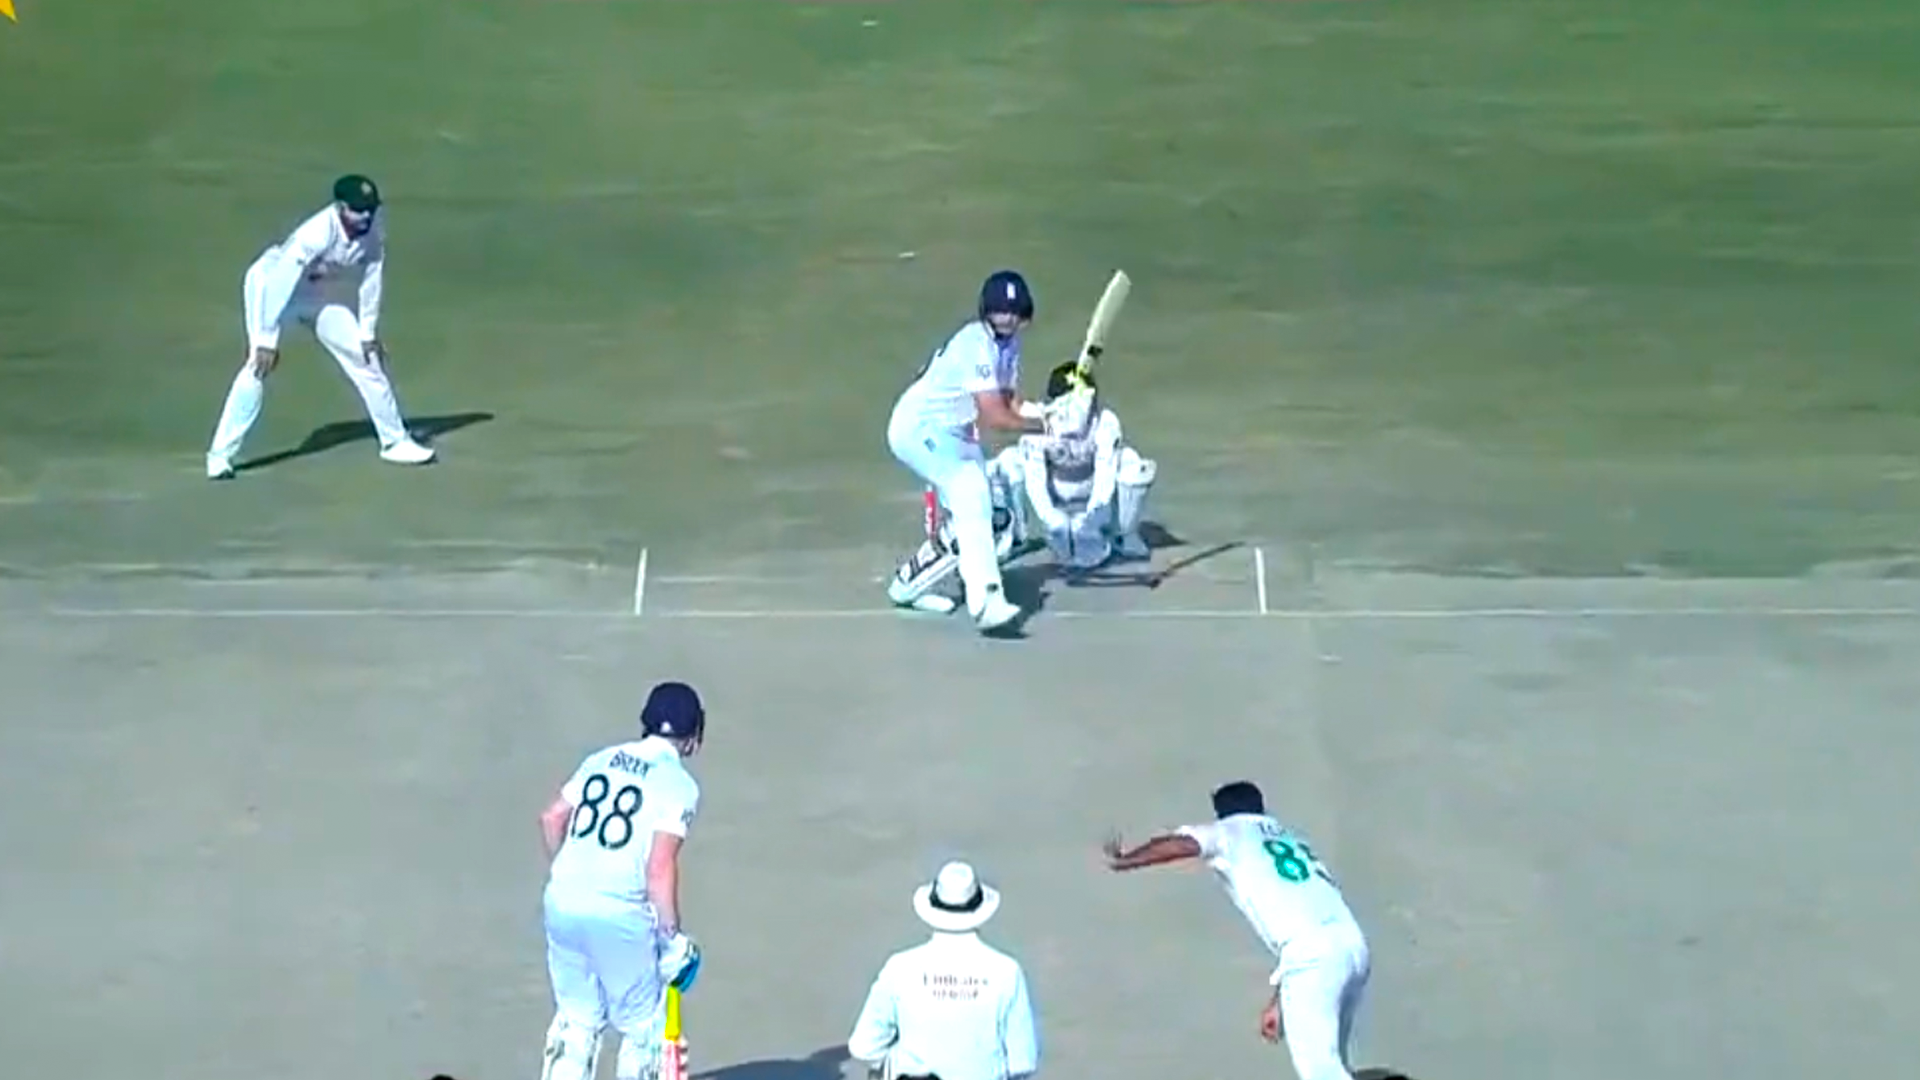 Video- Joe Root Batting Left-Handed Against Pakistani Bowler Gone Viral